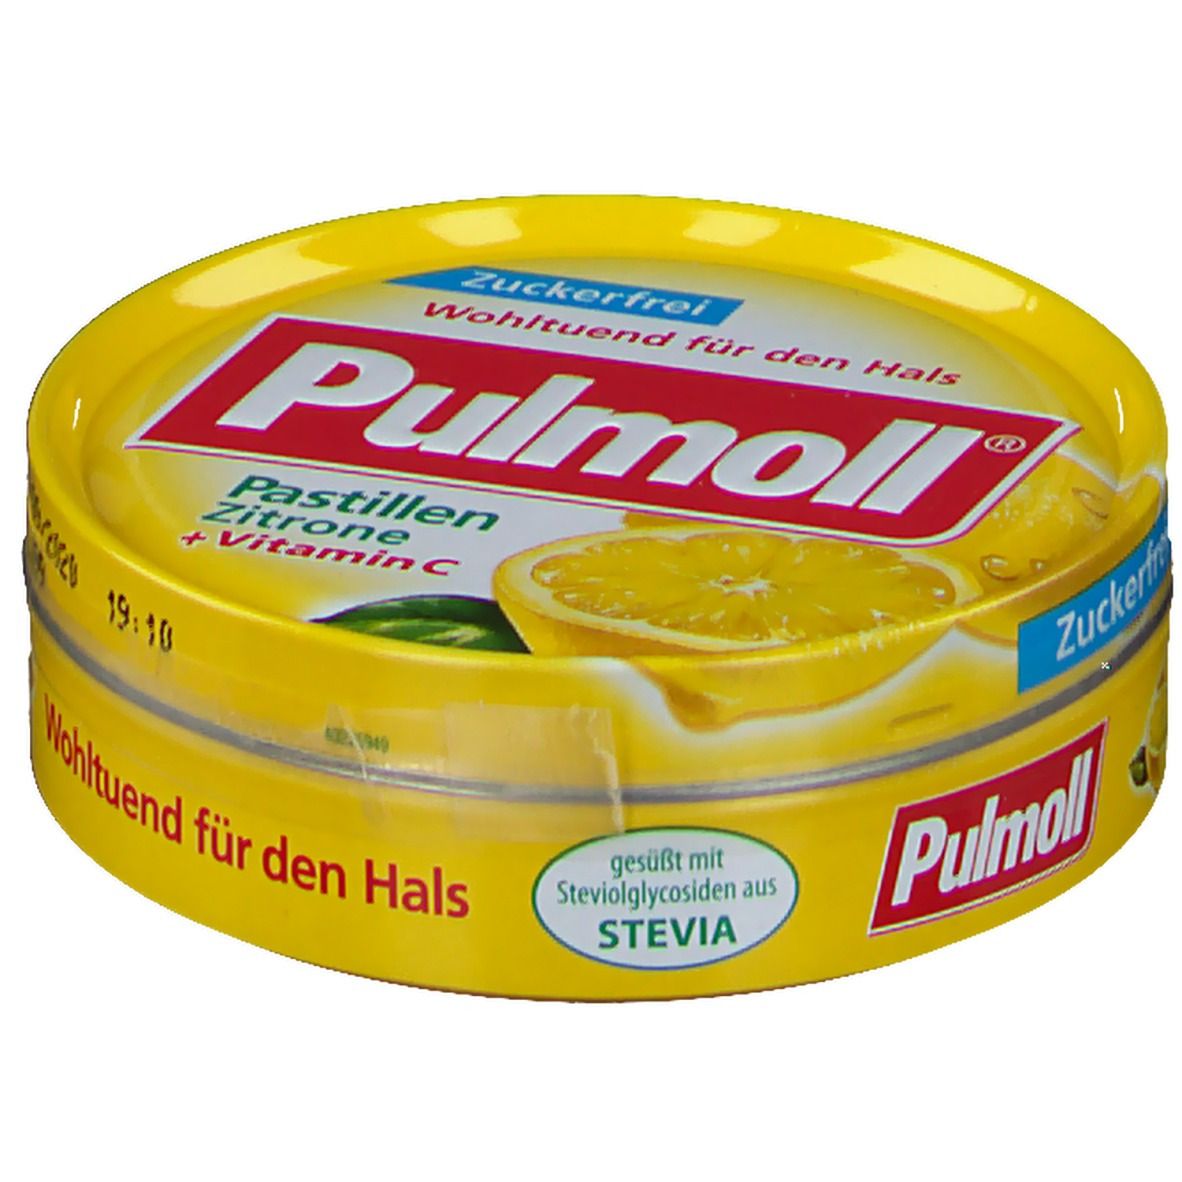 Pulmoll Hustenbonbon: Kleine Pastille, großes Sortiment.